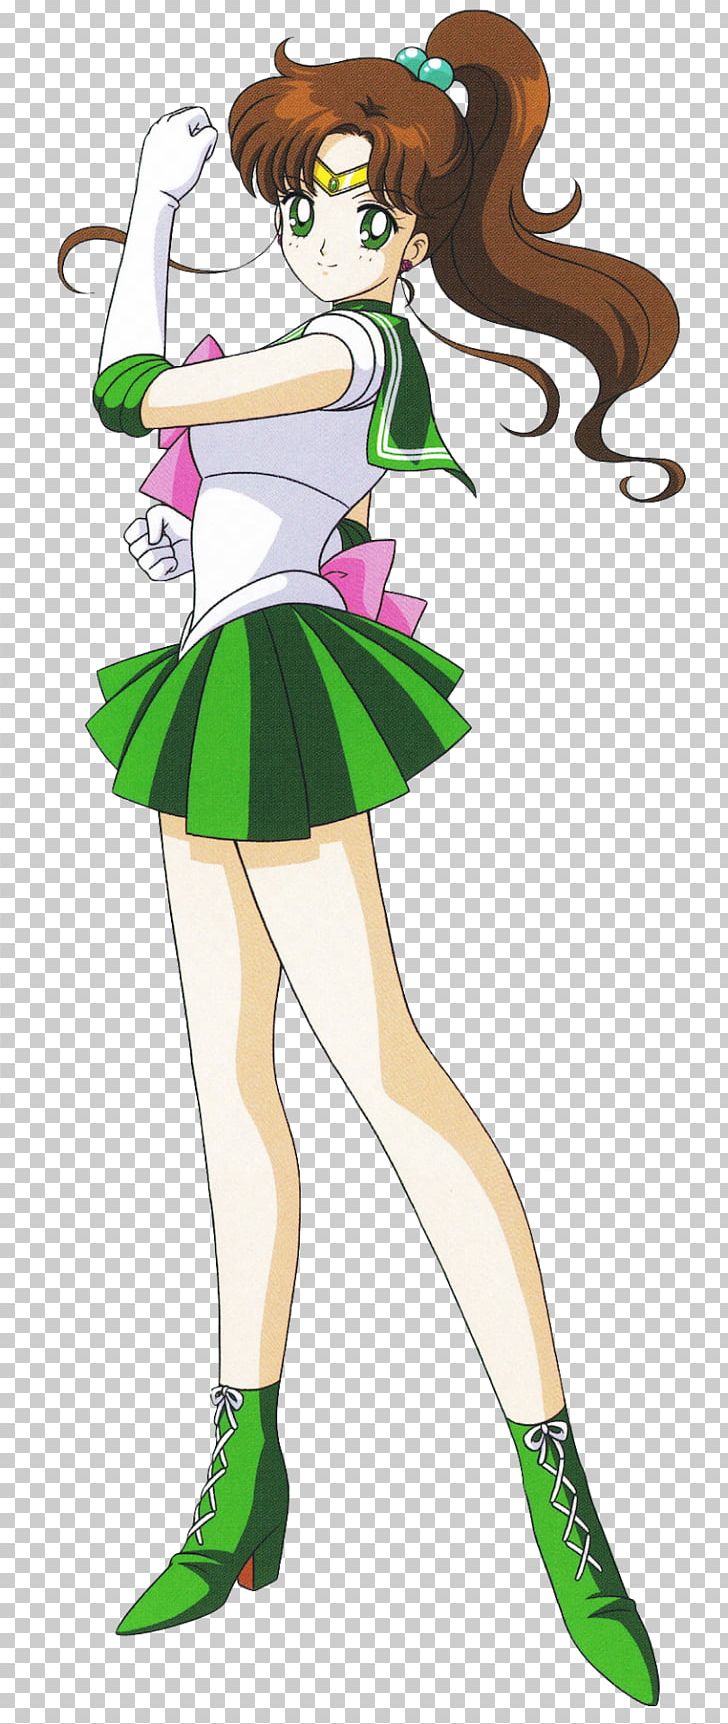 Sailor Jupiter Sailor Moon Sailor Senshi Art Character PNG, Clipart, Cartoon, Fashion Design, Fictional Character, Flower, Girl Free PNG Download